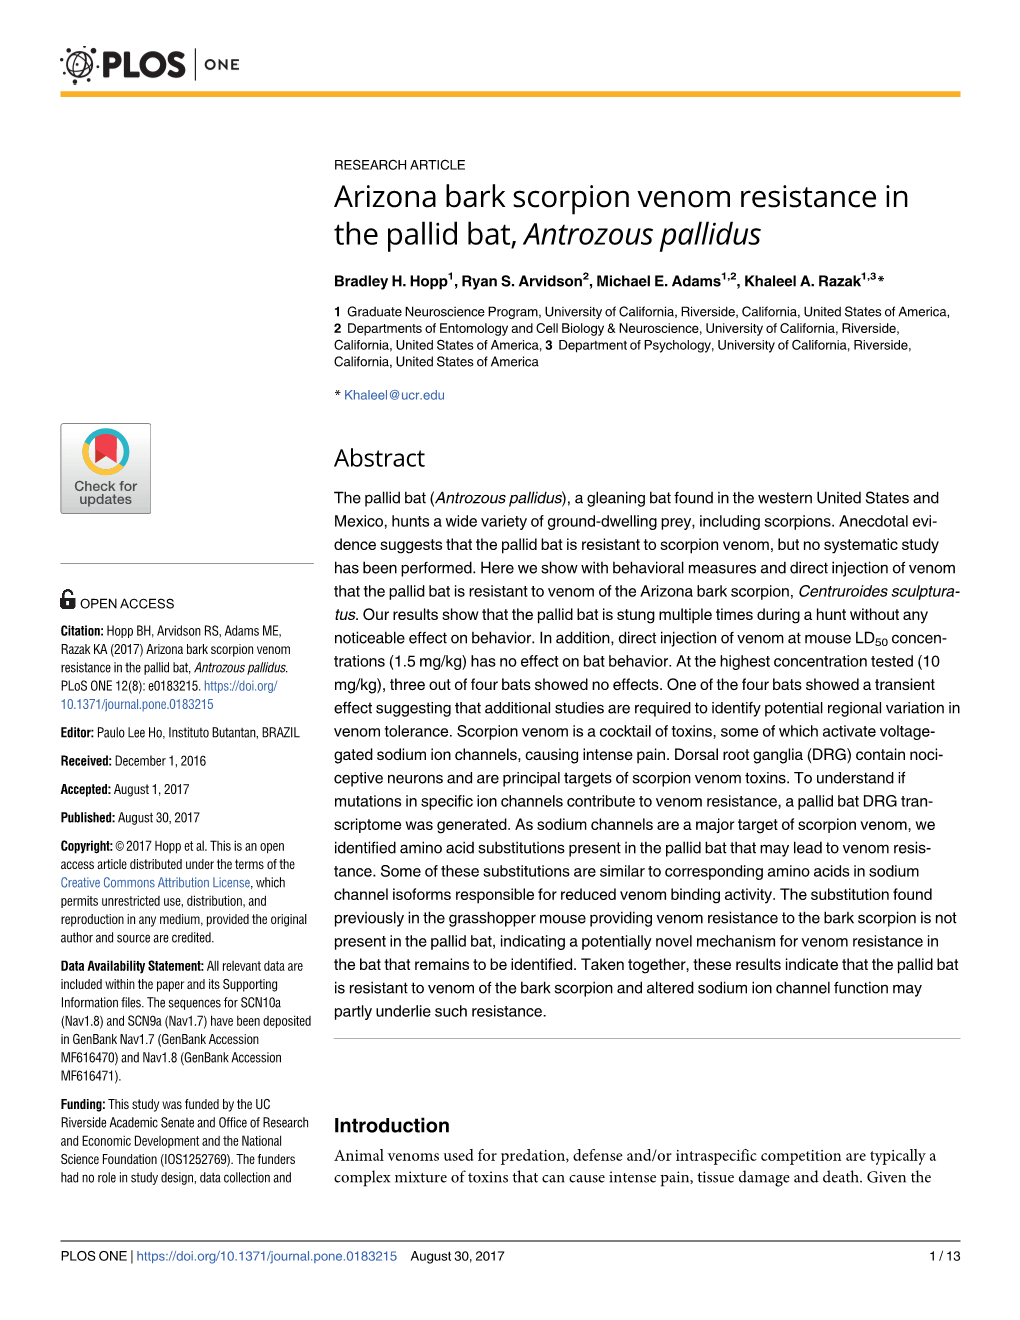 Arizona Bark Scorpion Venom Resistance in the Pallid Bat, Antrozous Pallidus